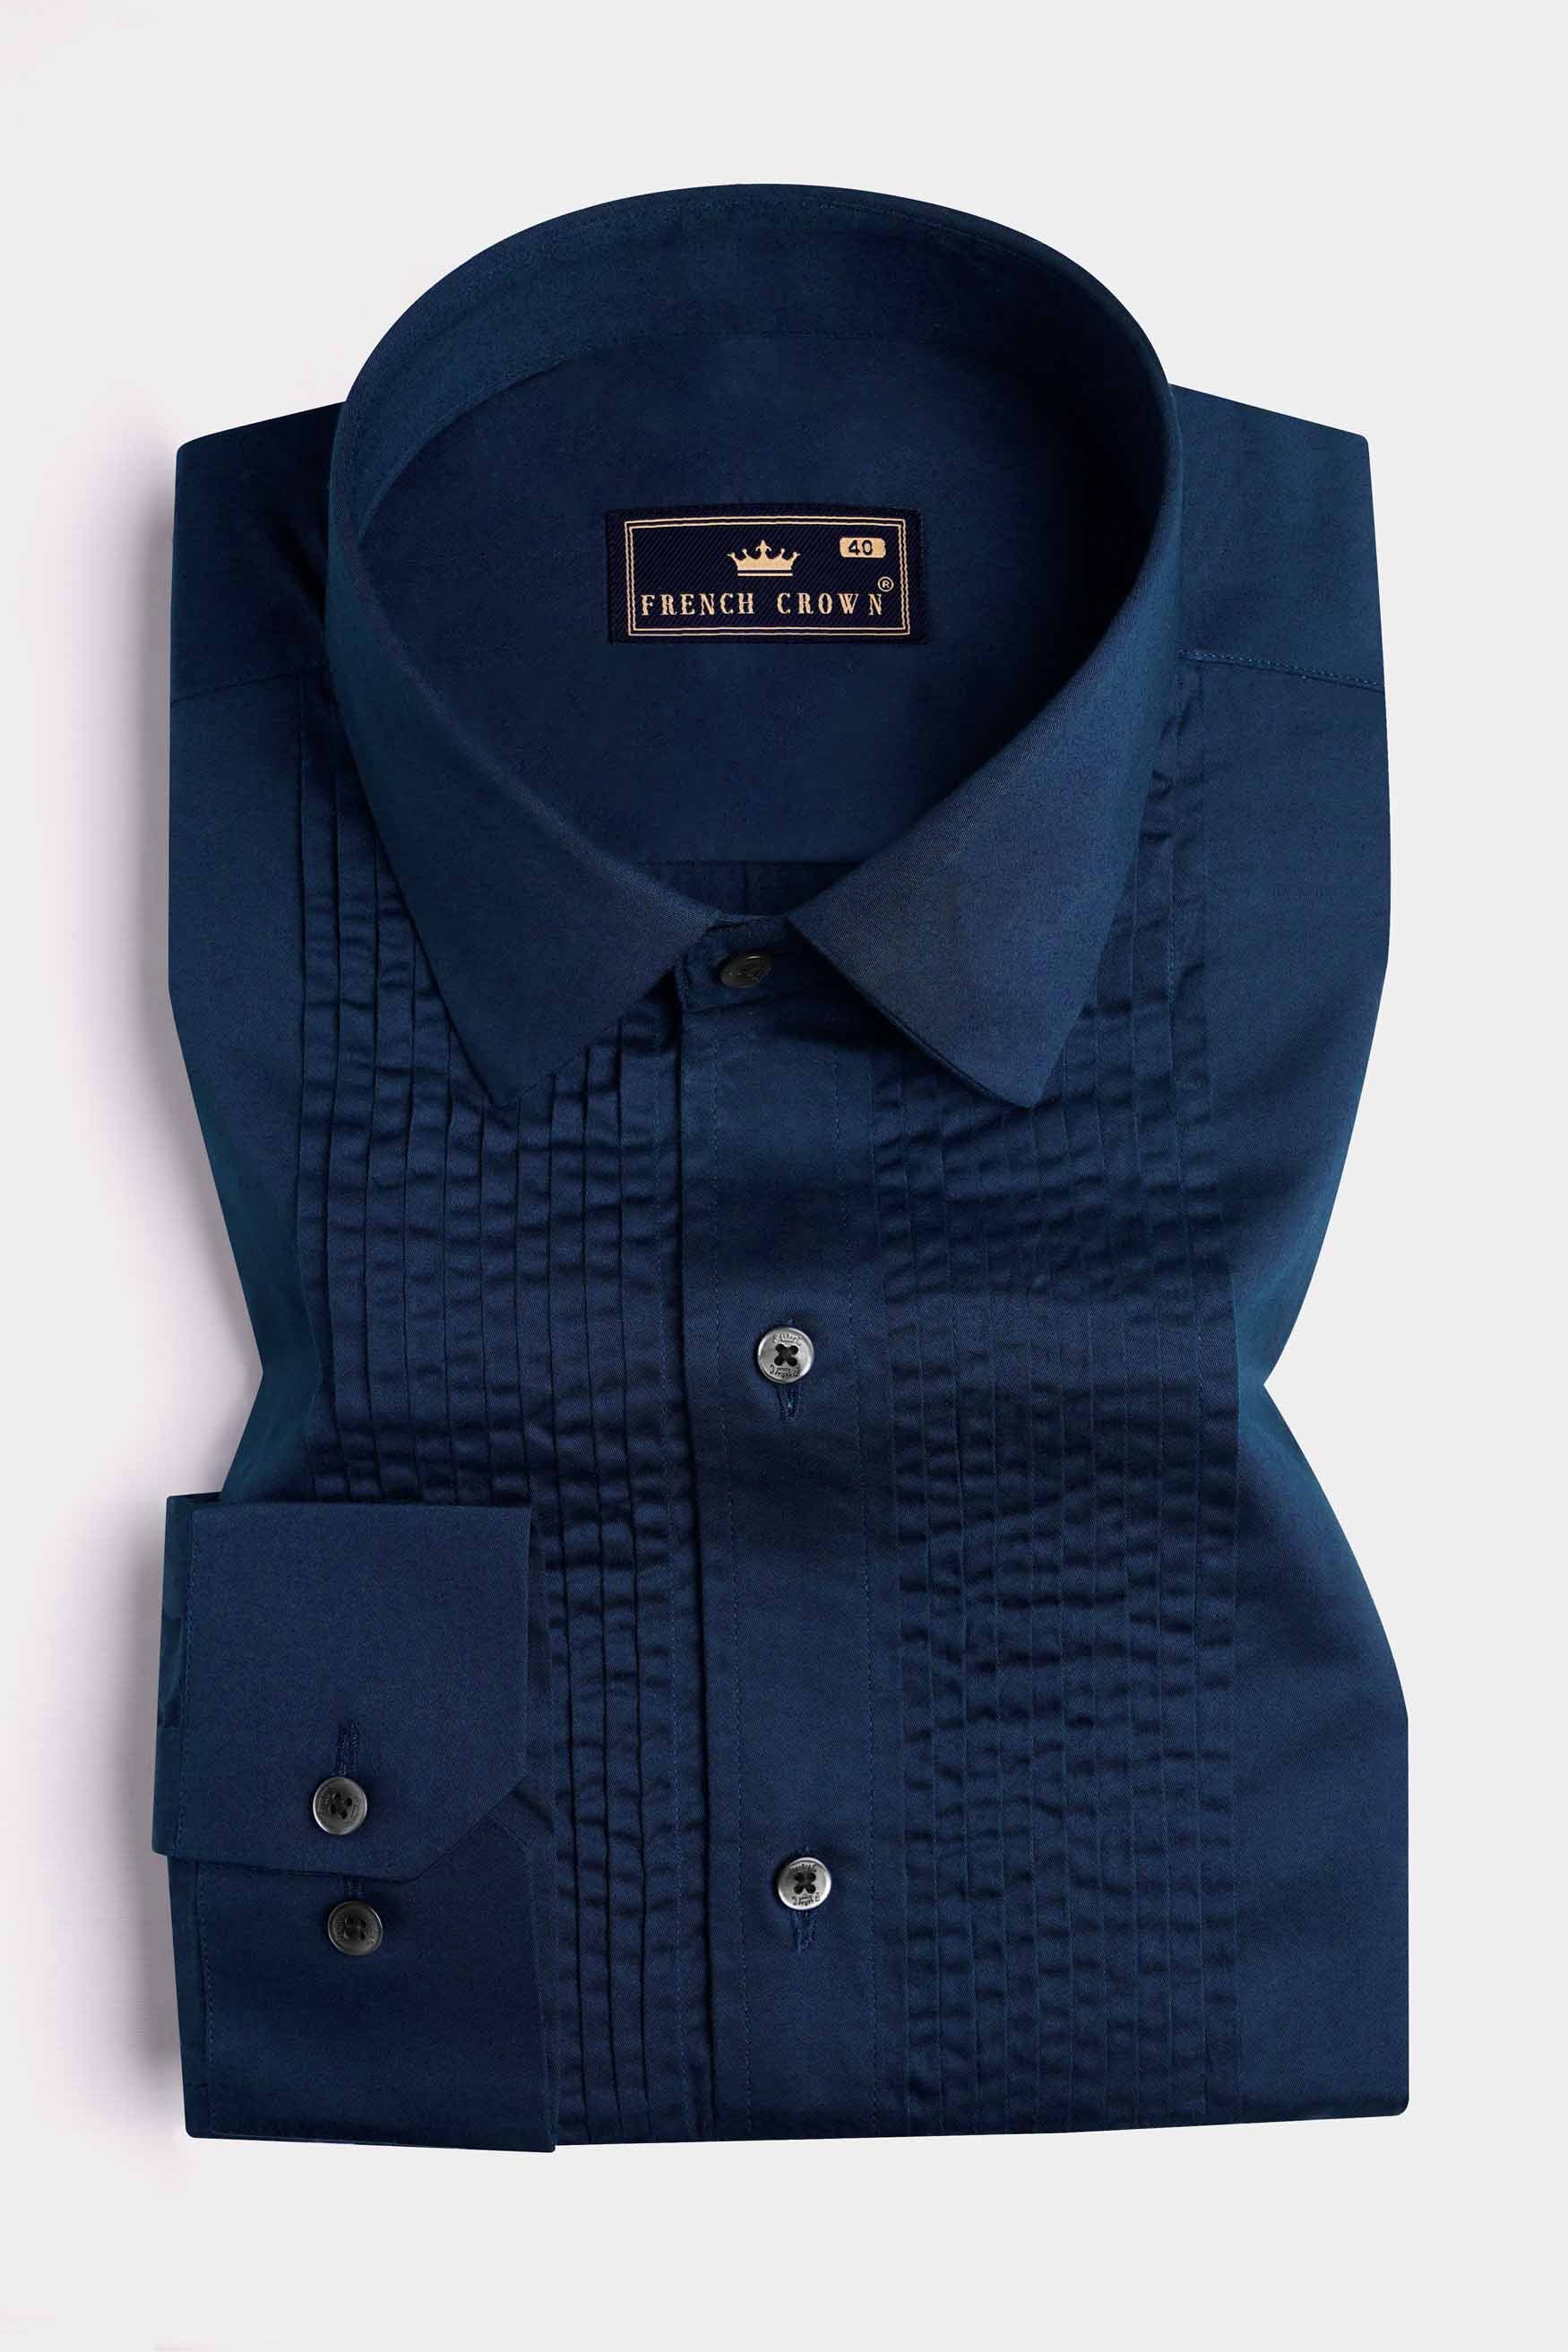 Tangaroa Blue Subtle Sheen Super Soft Premium Cotton Tuxedo Shirt